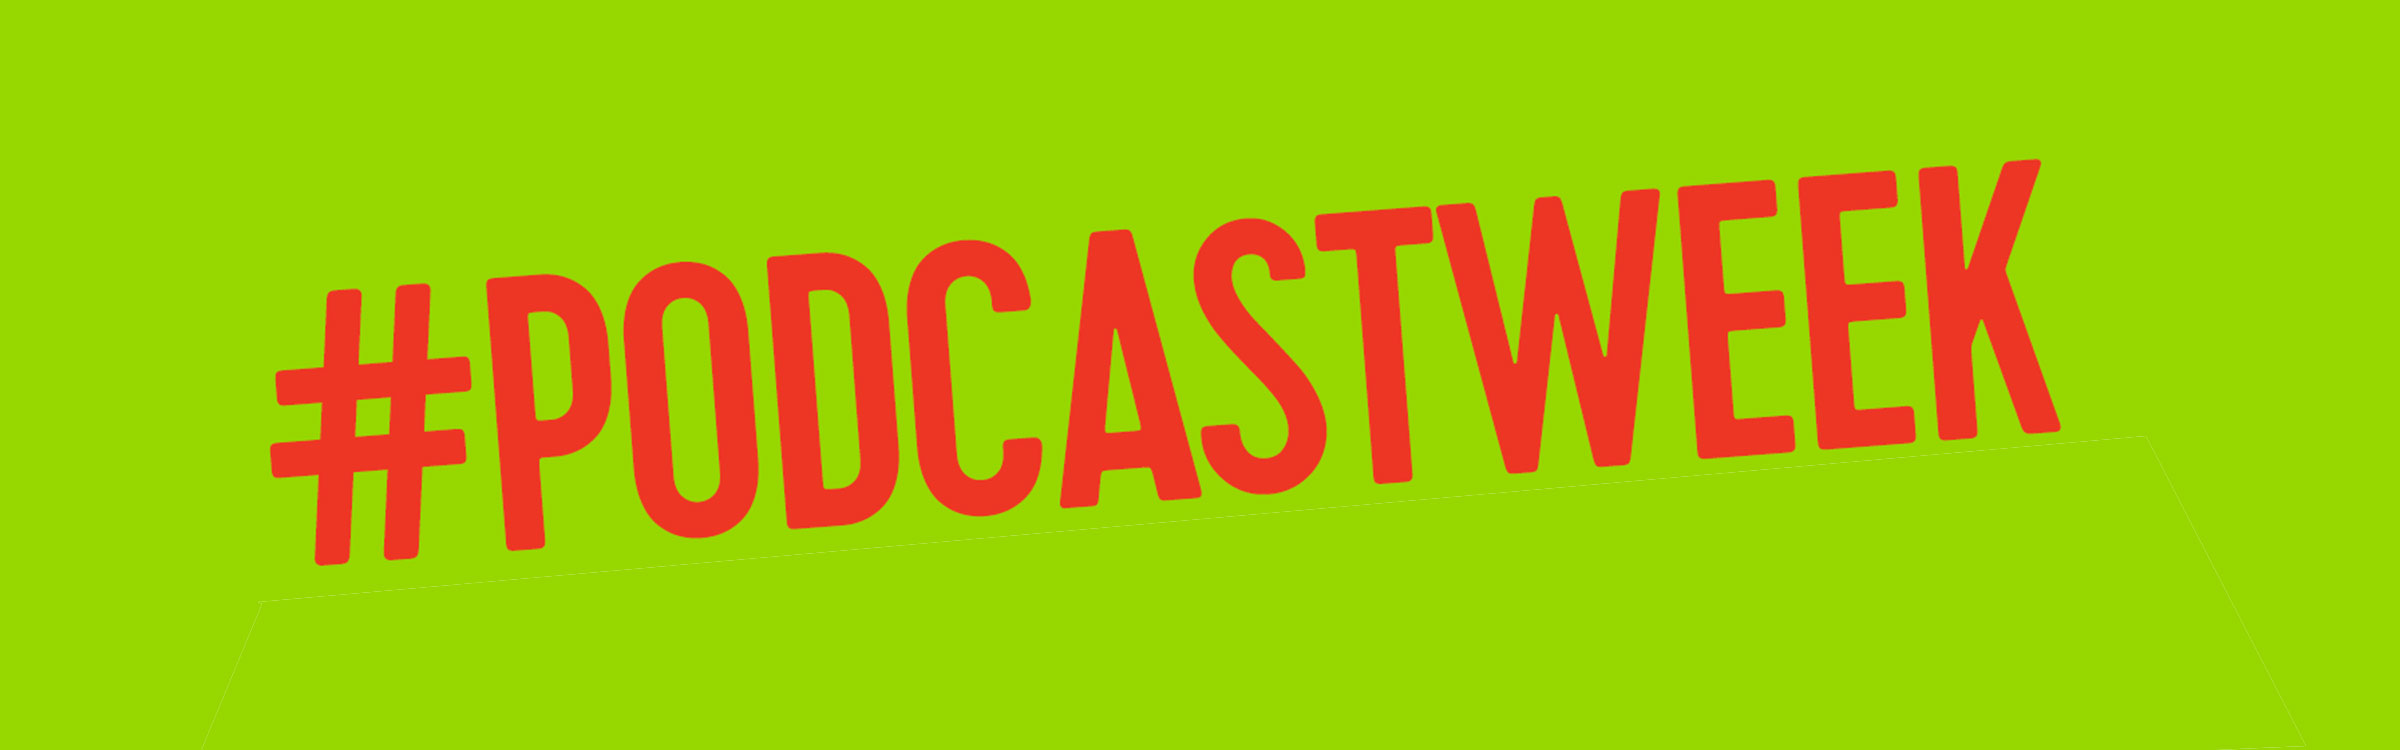 Podcastweek header